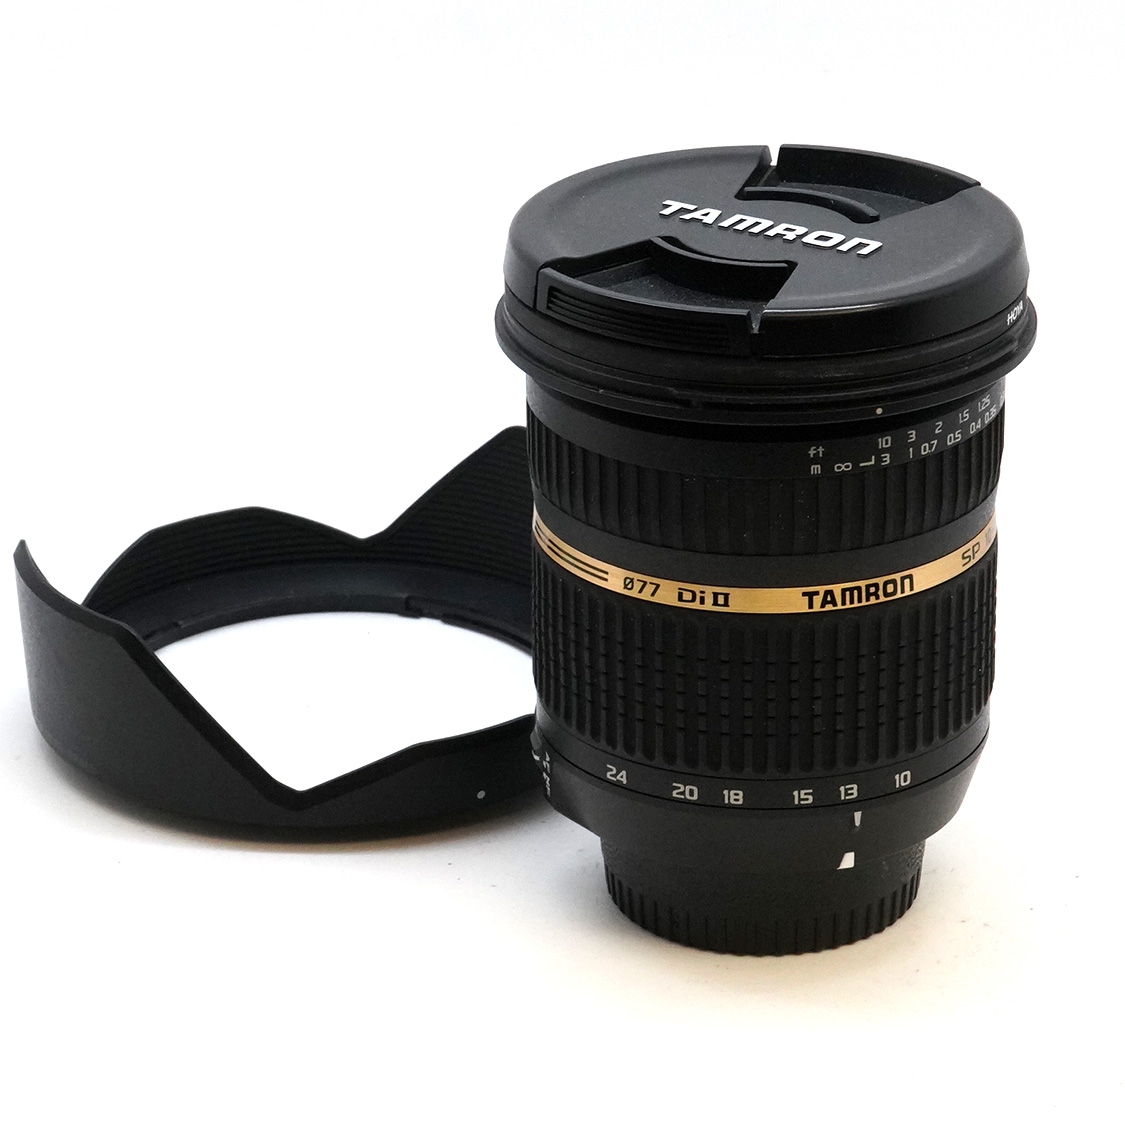 Tamron SP 10-24mm F3.5-4.5 DI (EX+) Used Lens for Nikon F Mount